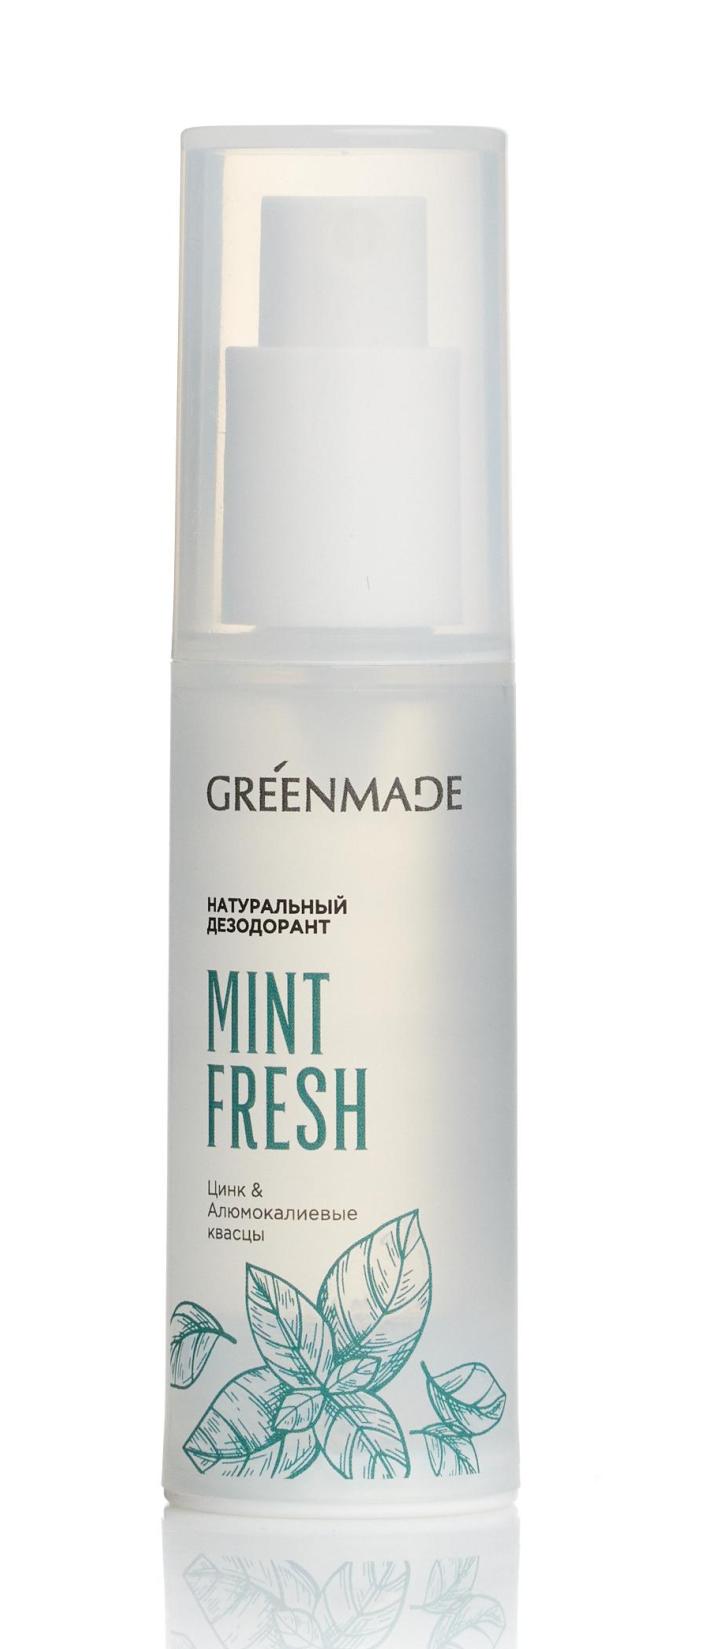 Дезодорант «MINT FRESH» Greenmade, 30 мл купить в онлайн экомаркете